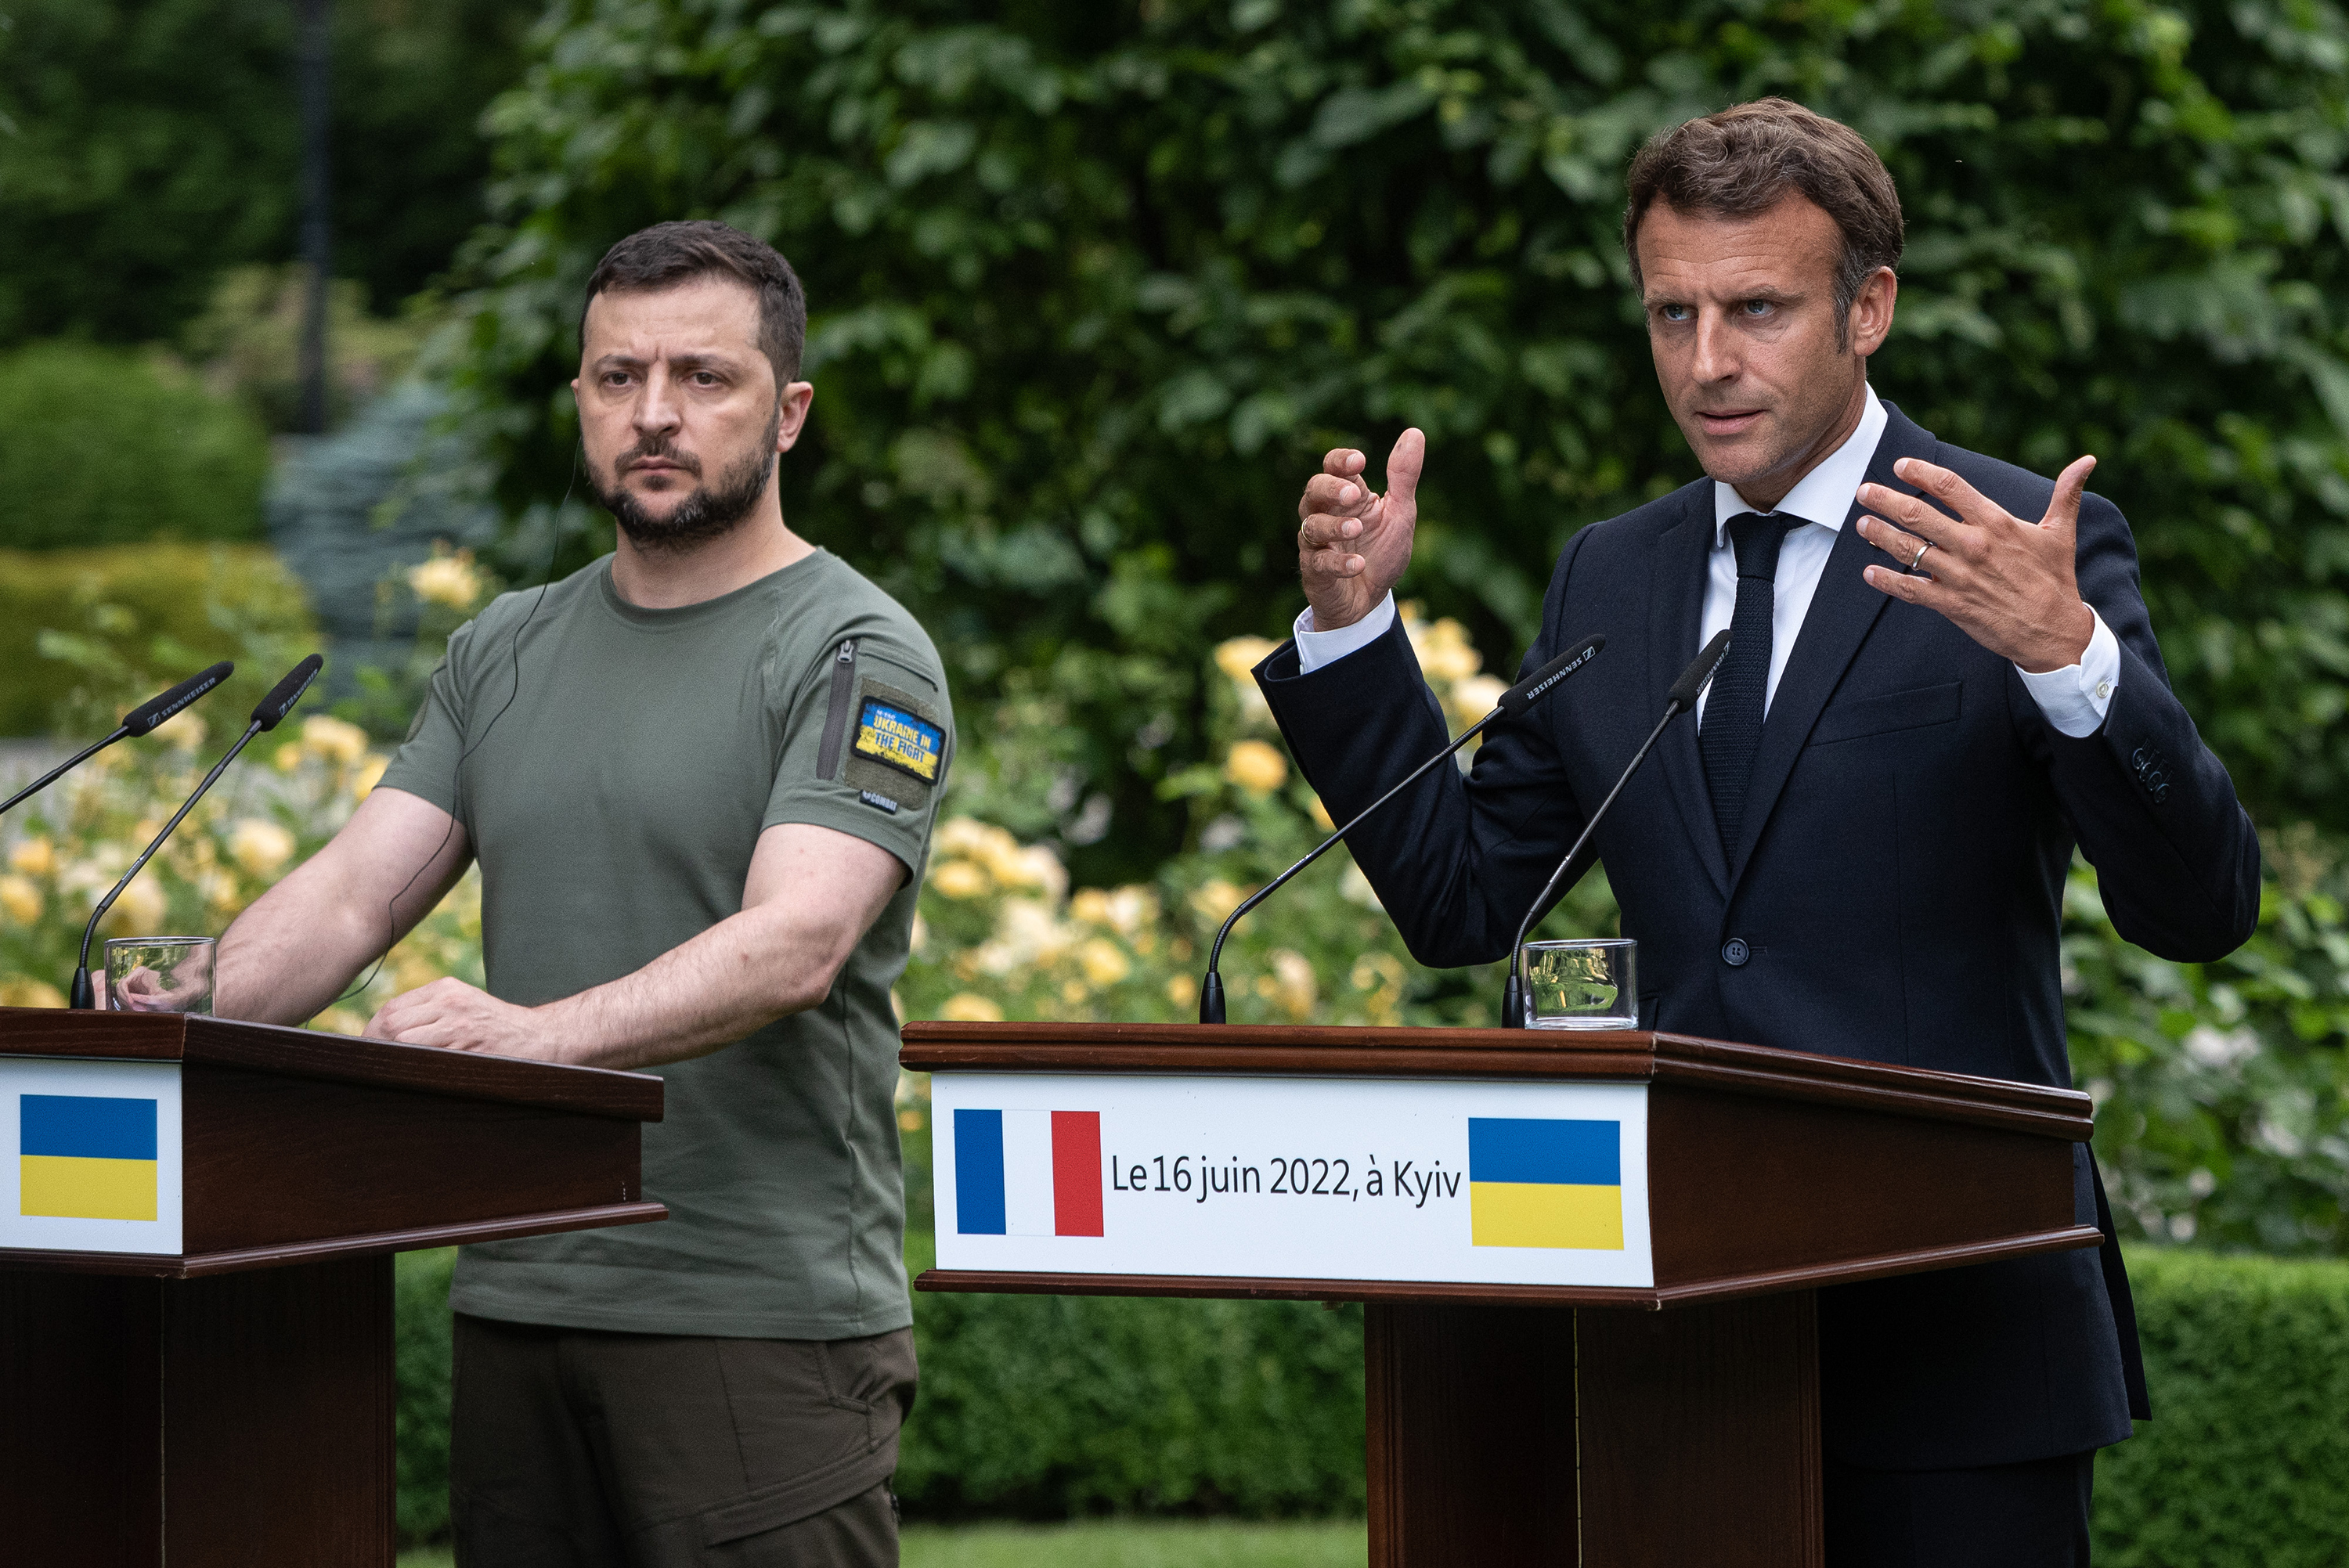 Ukrainian President Volodymyr Zelensky and French President Emmanuel Macron speak during a press conference on June 16 in Kyiv, Ukraine.